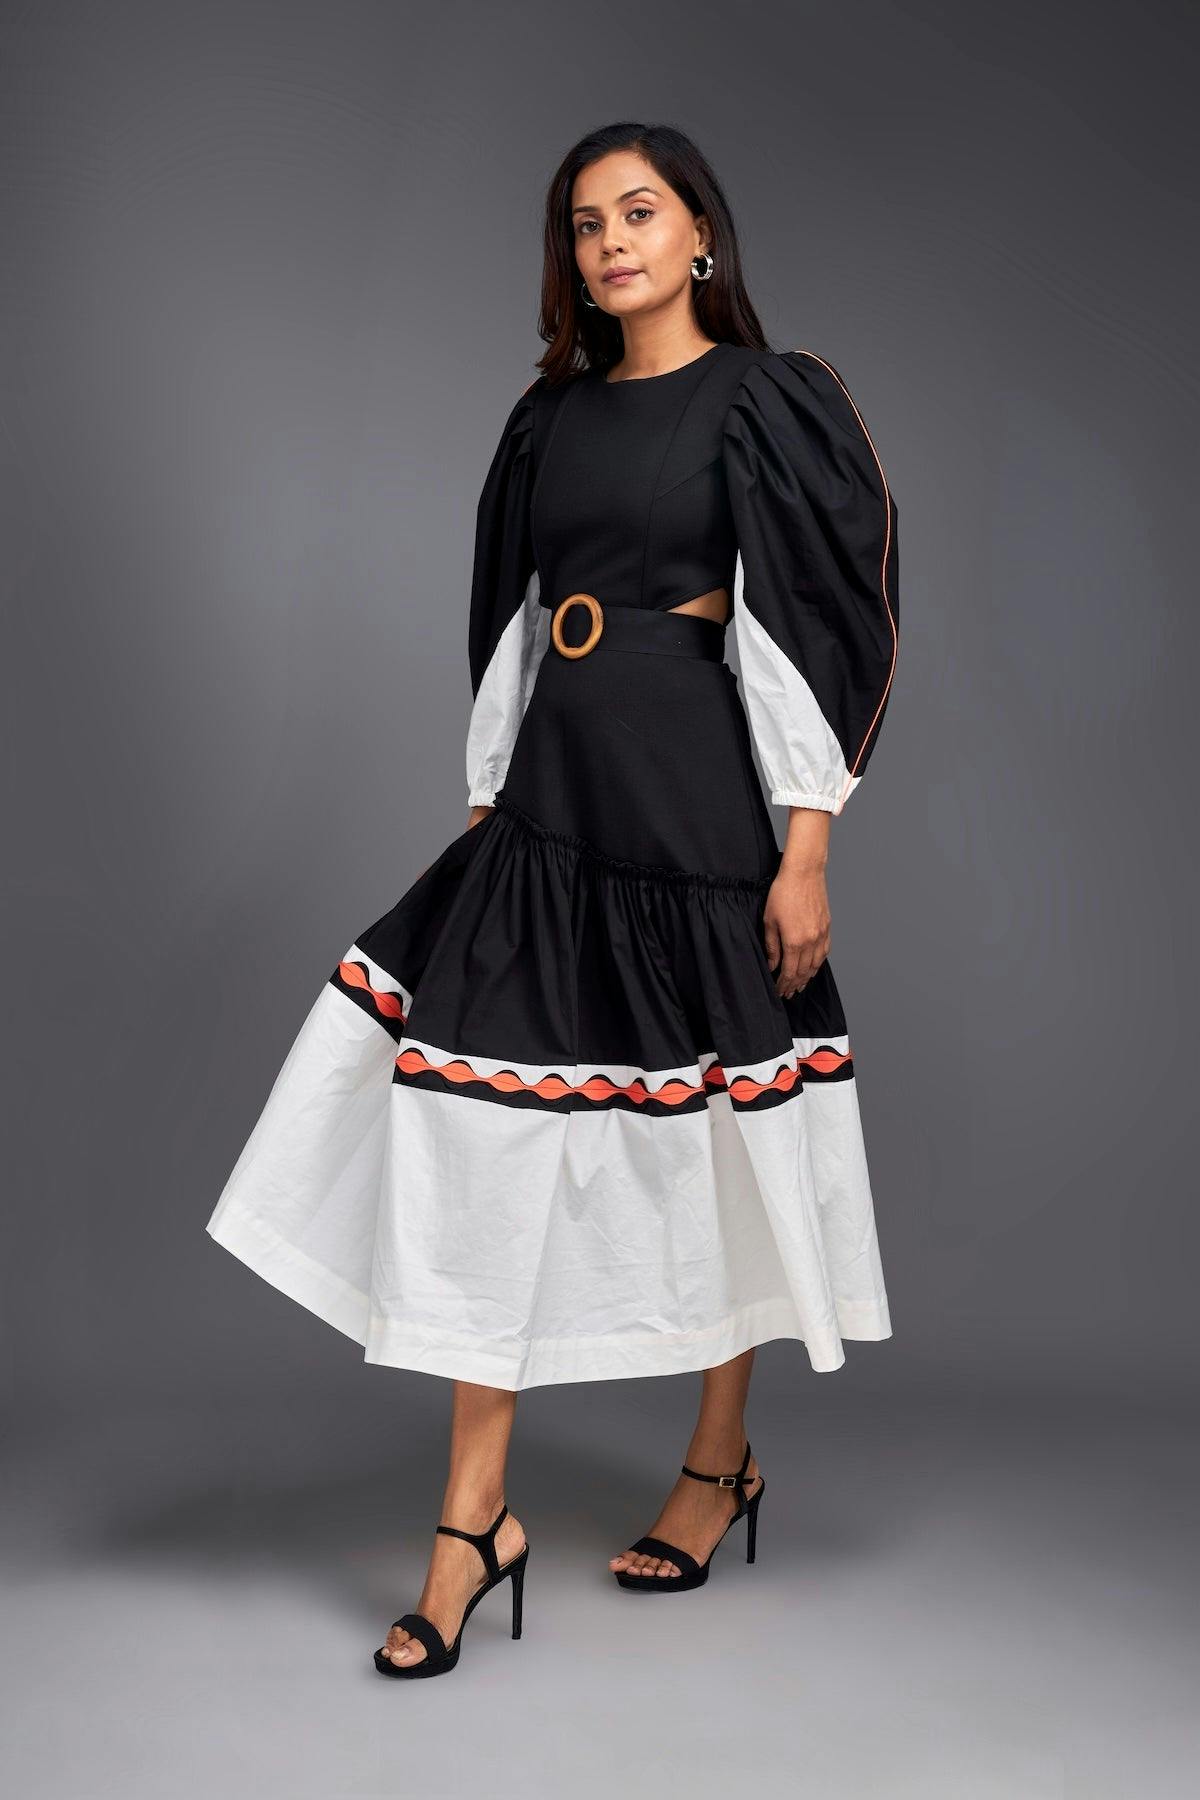 Black & White Colour Block Side Cutout Dress, a product by Deepika Arora